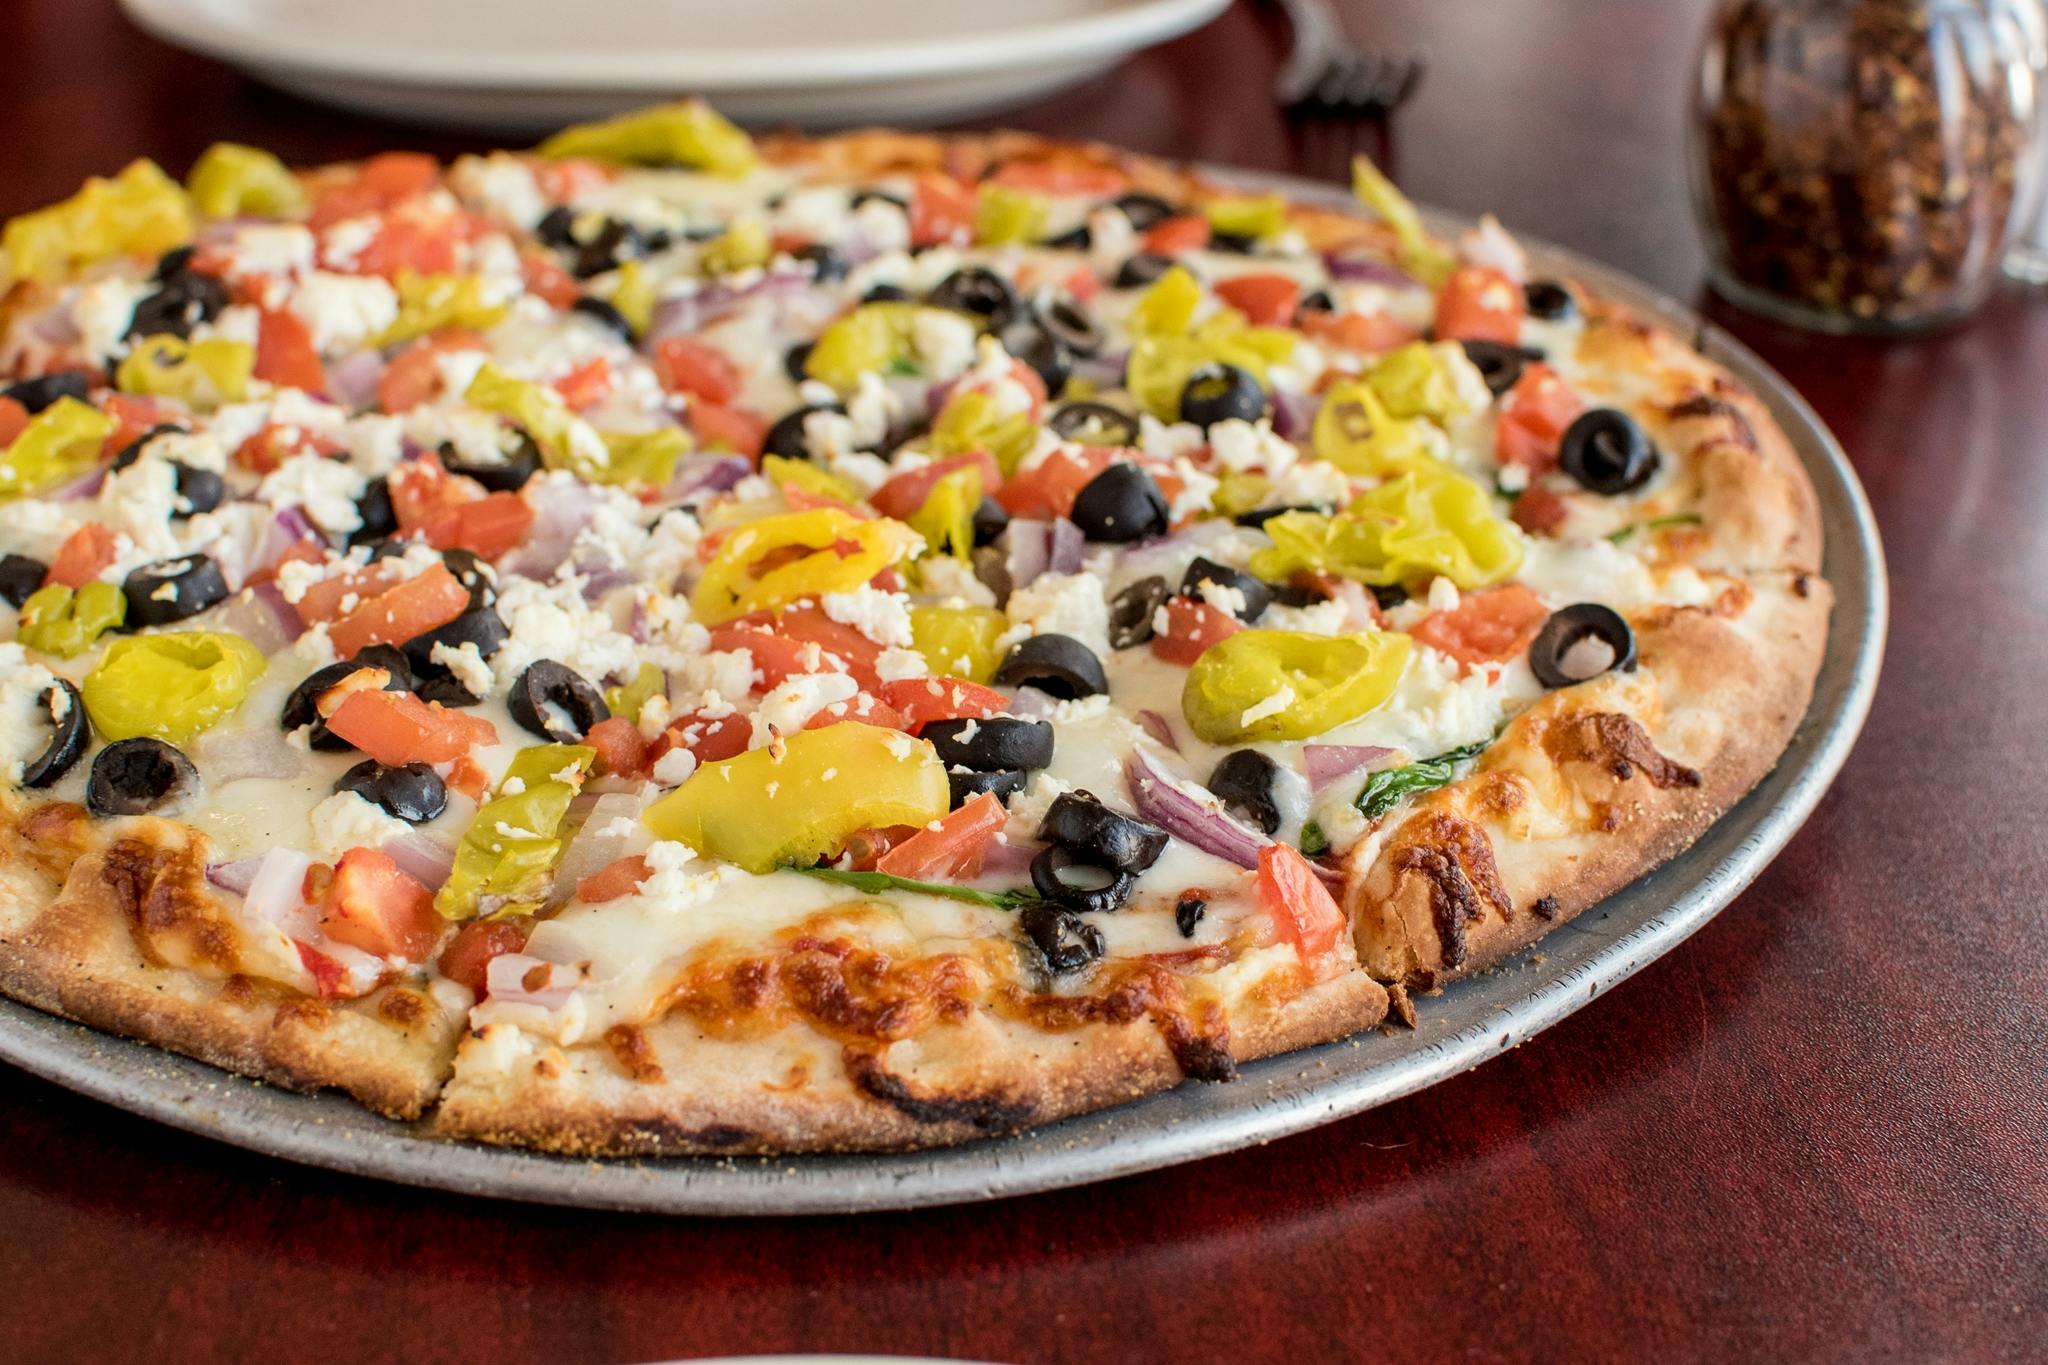 The Zeus Pizza from Falbo Bros. Pizzeria - Sun Prairie in Sun Prairie, WI